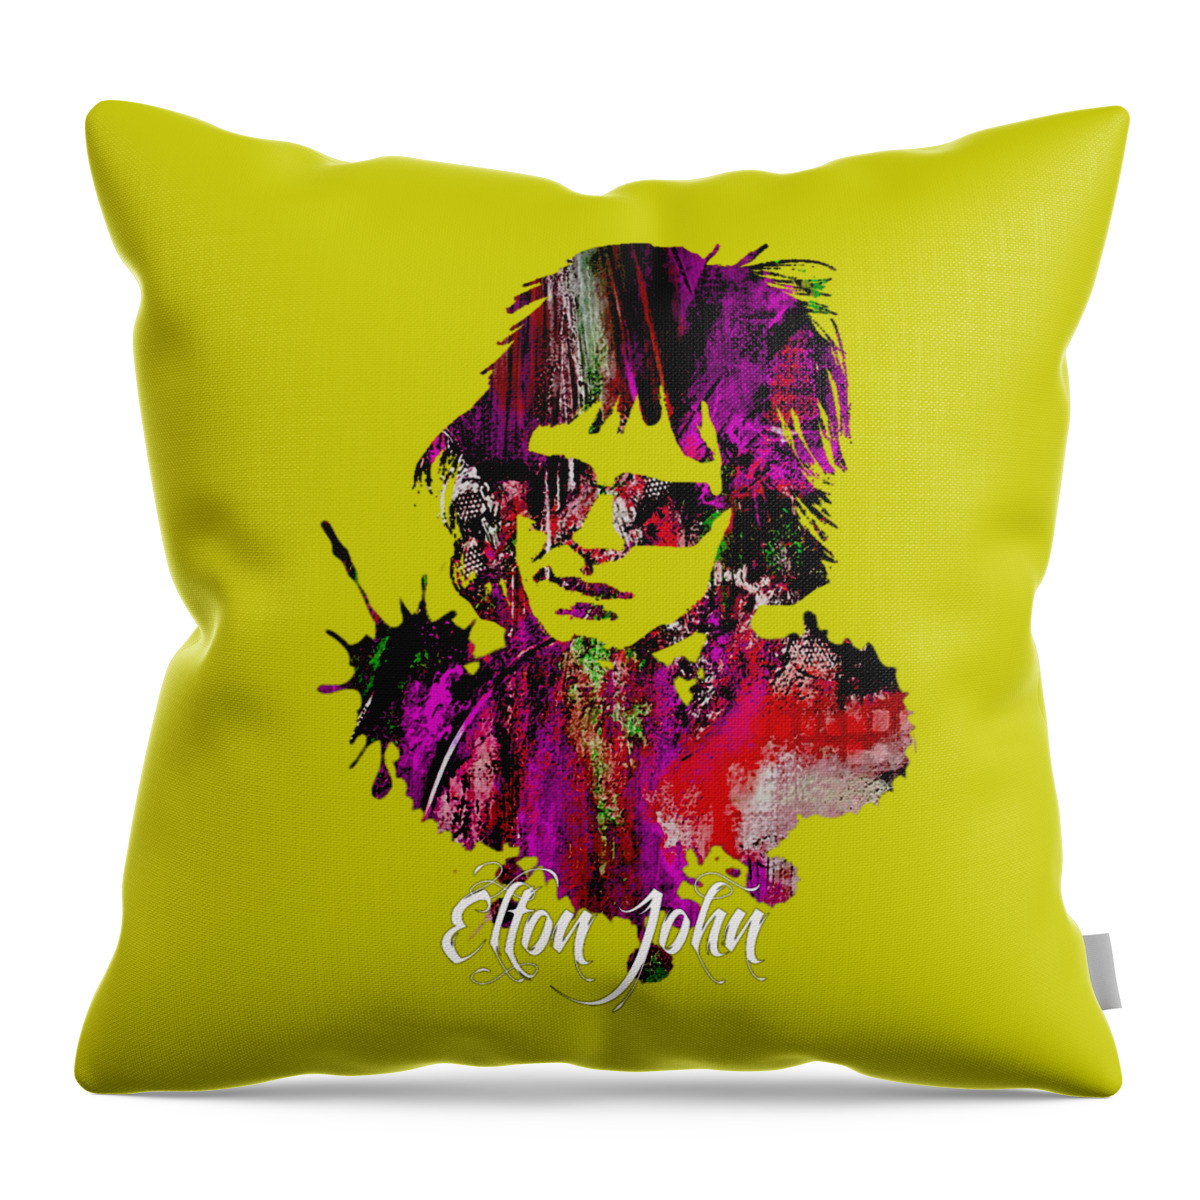 Elton John Throw Pillow featuring the mixed media Elton John Collection #23 by Marvin Blaine